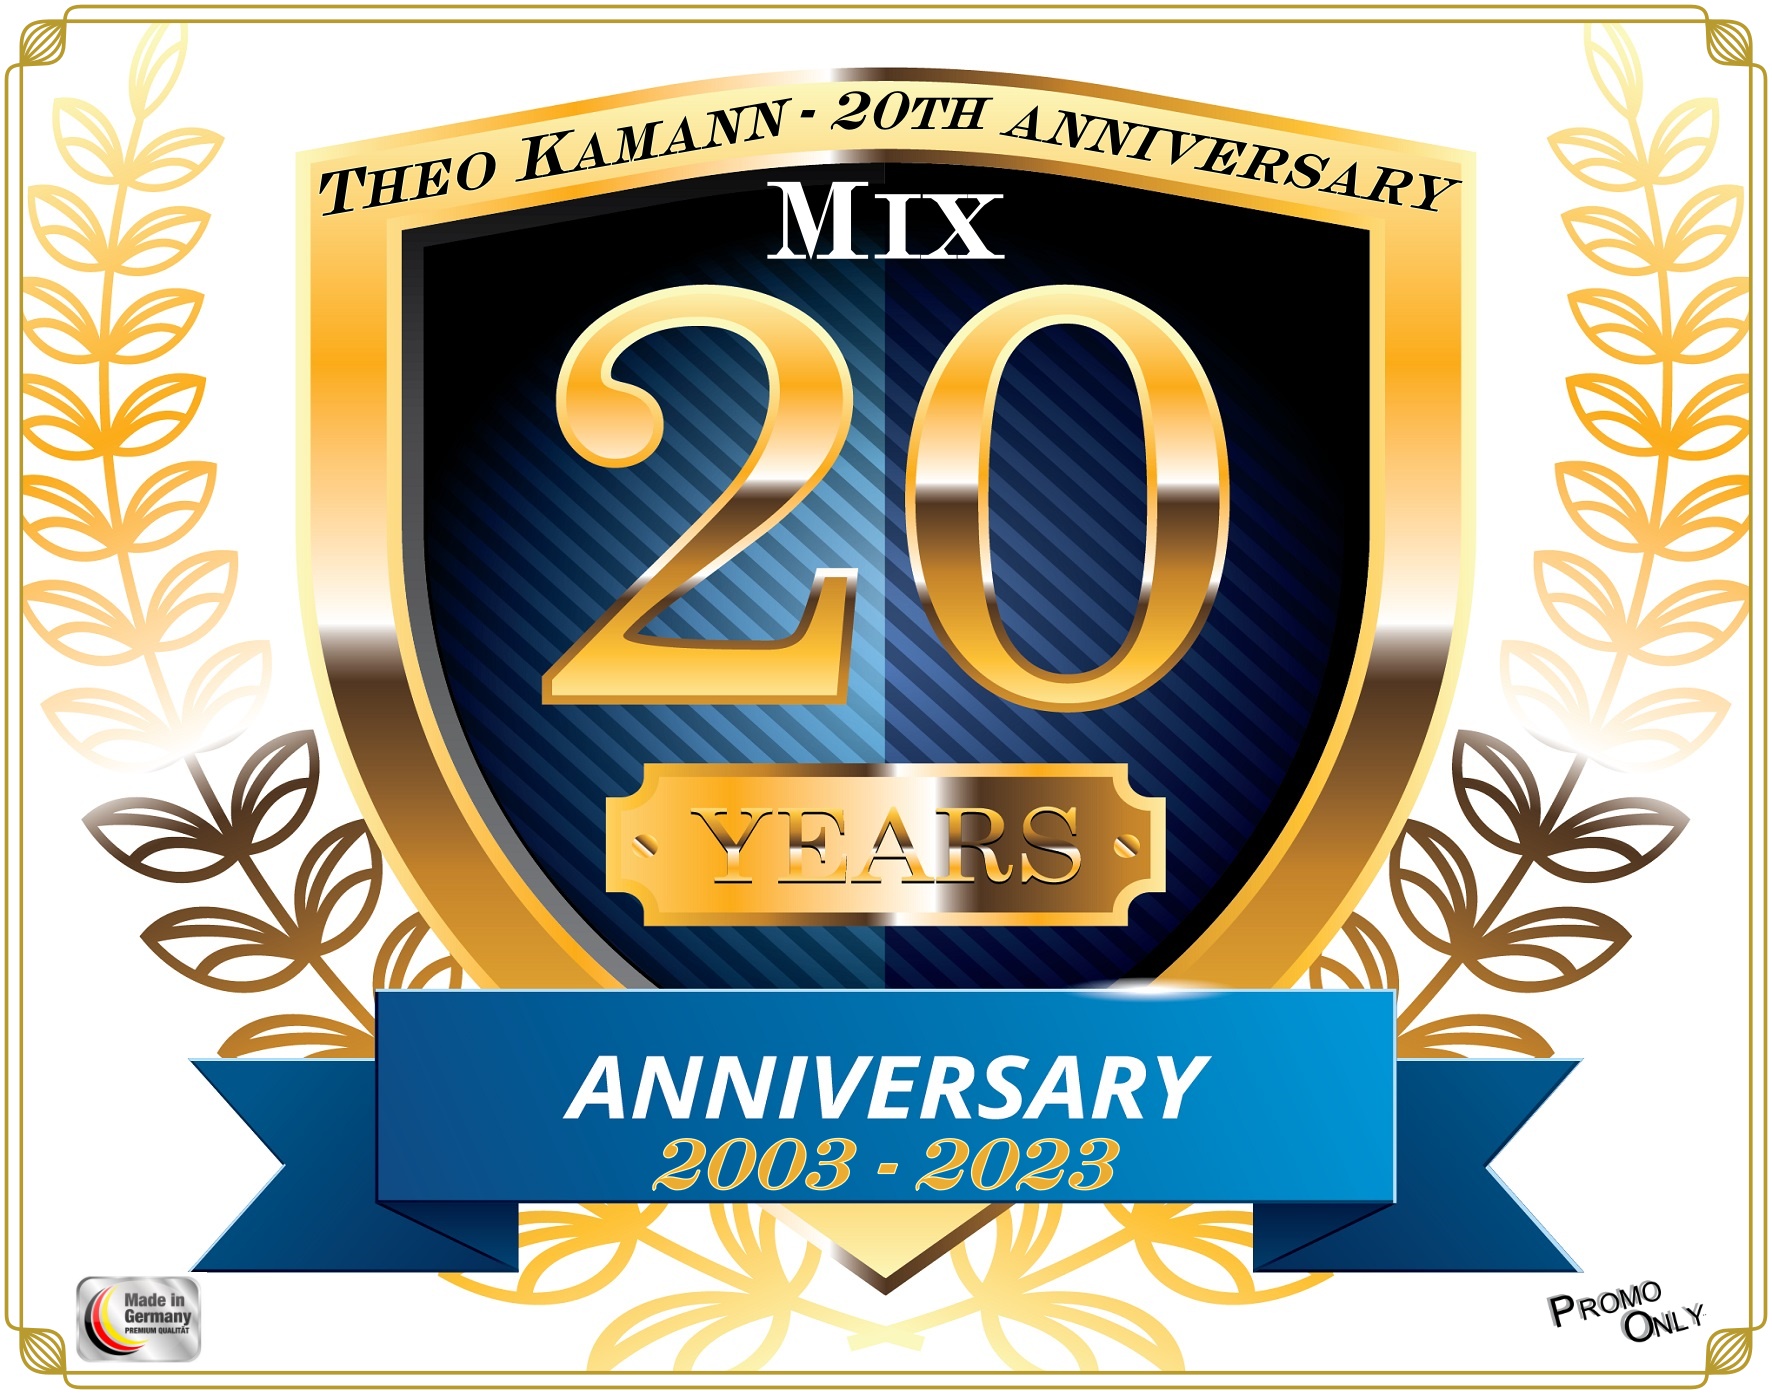 Theo Kamann-20th Anniversary Mix (2003-2023)